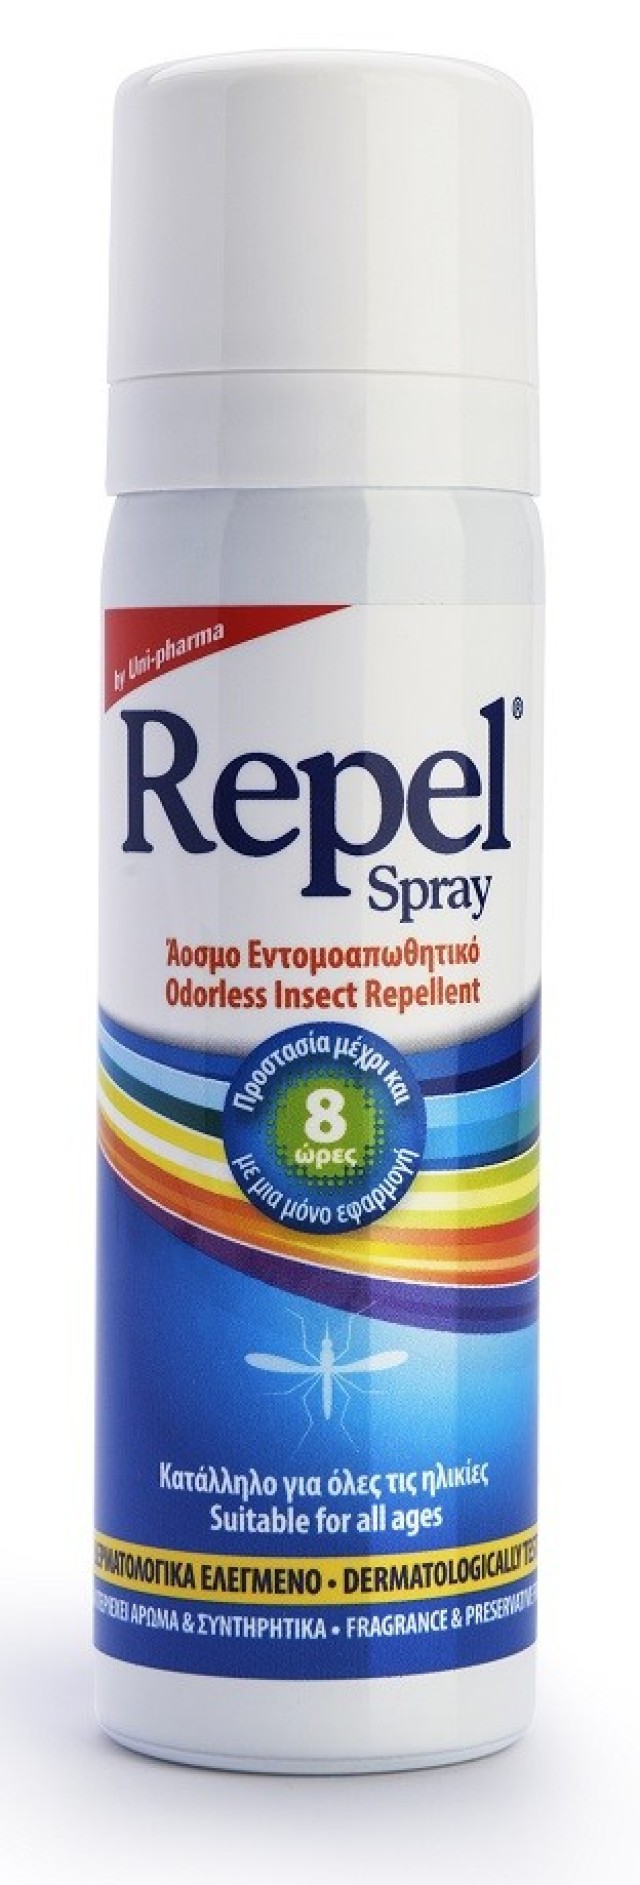 Uni-Pharma Repel Spray Άοσμο Εντομοαπωθητικό 50ml